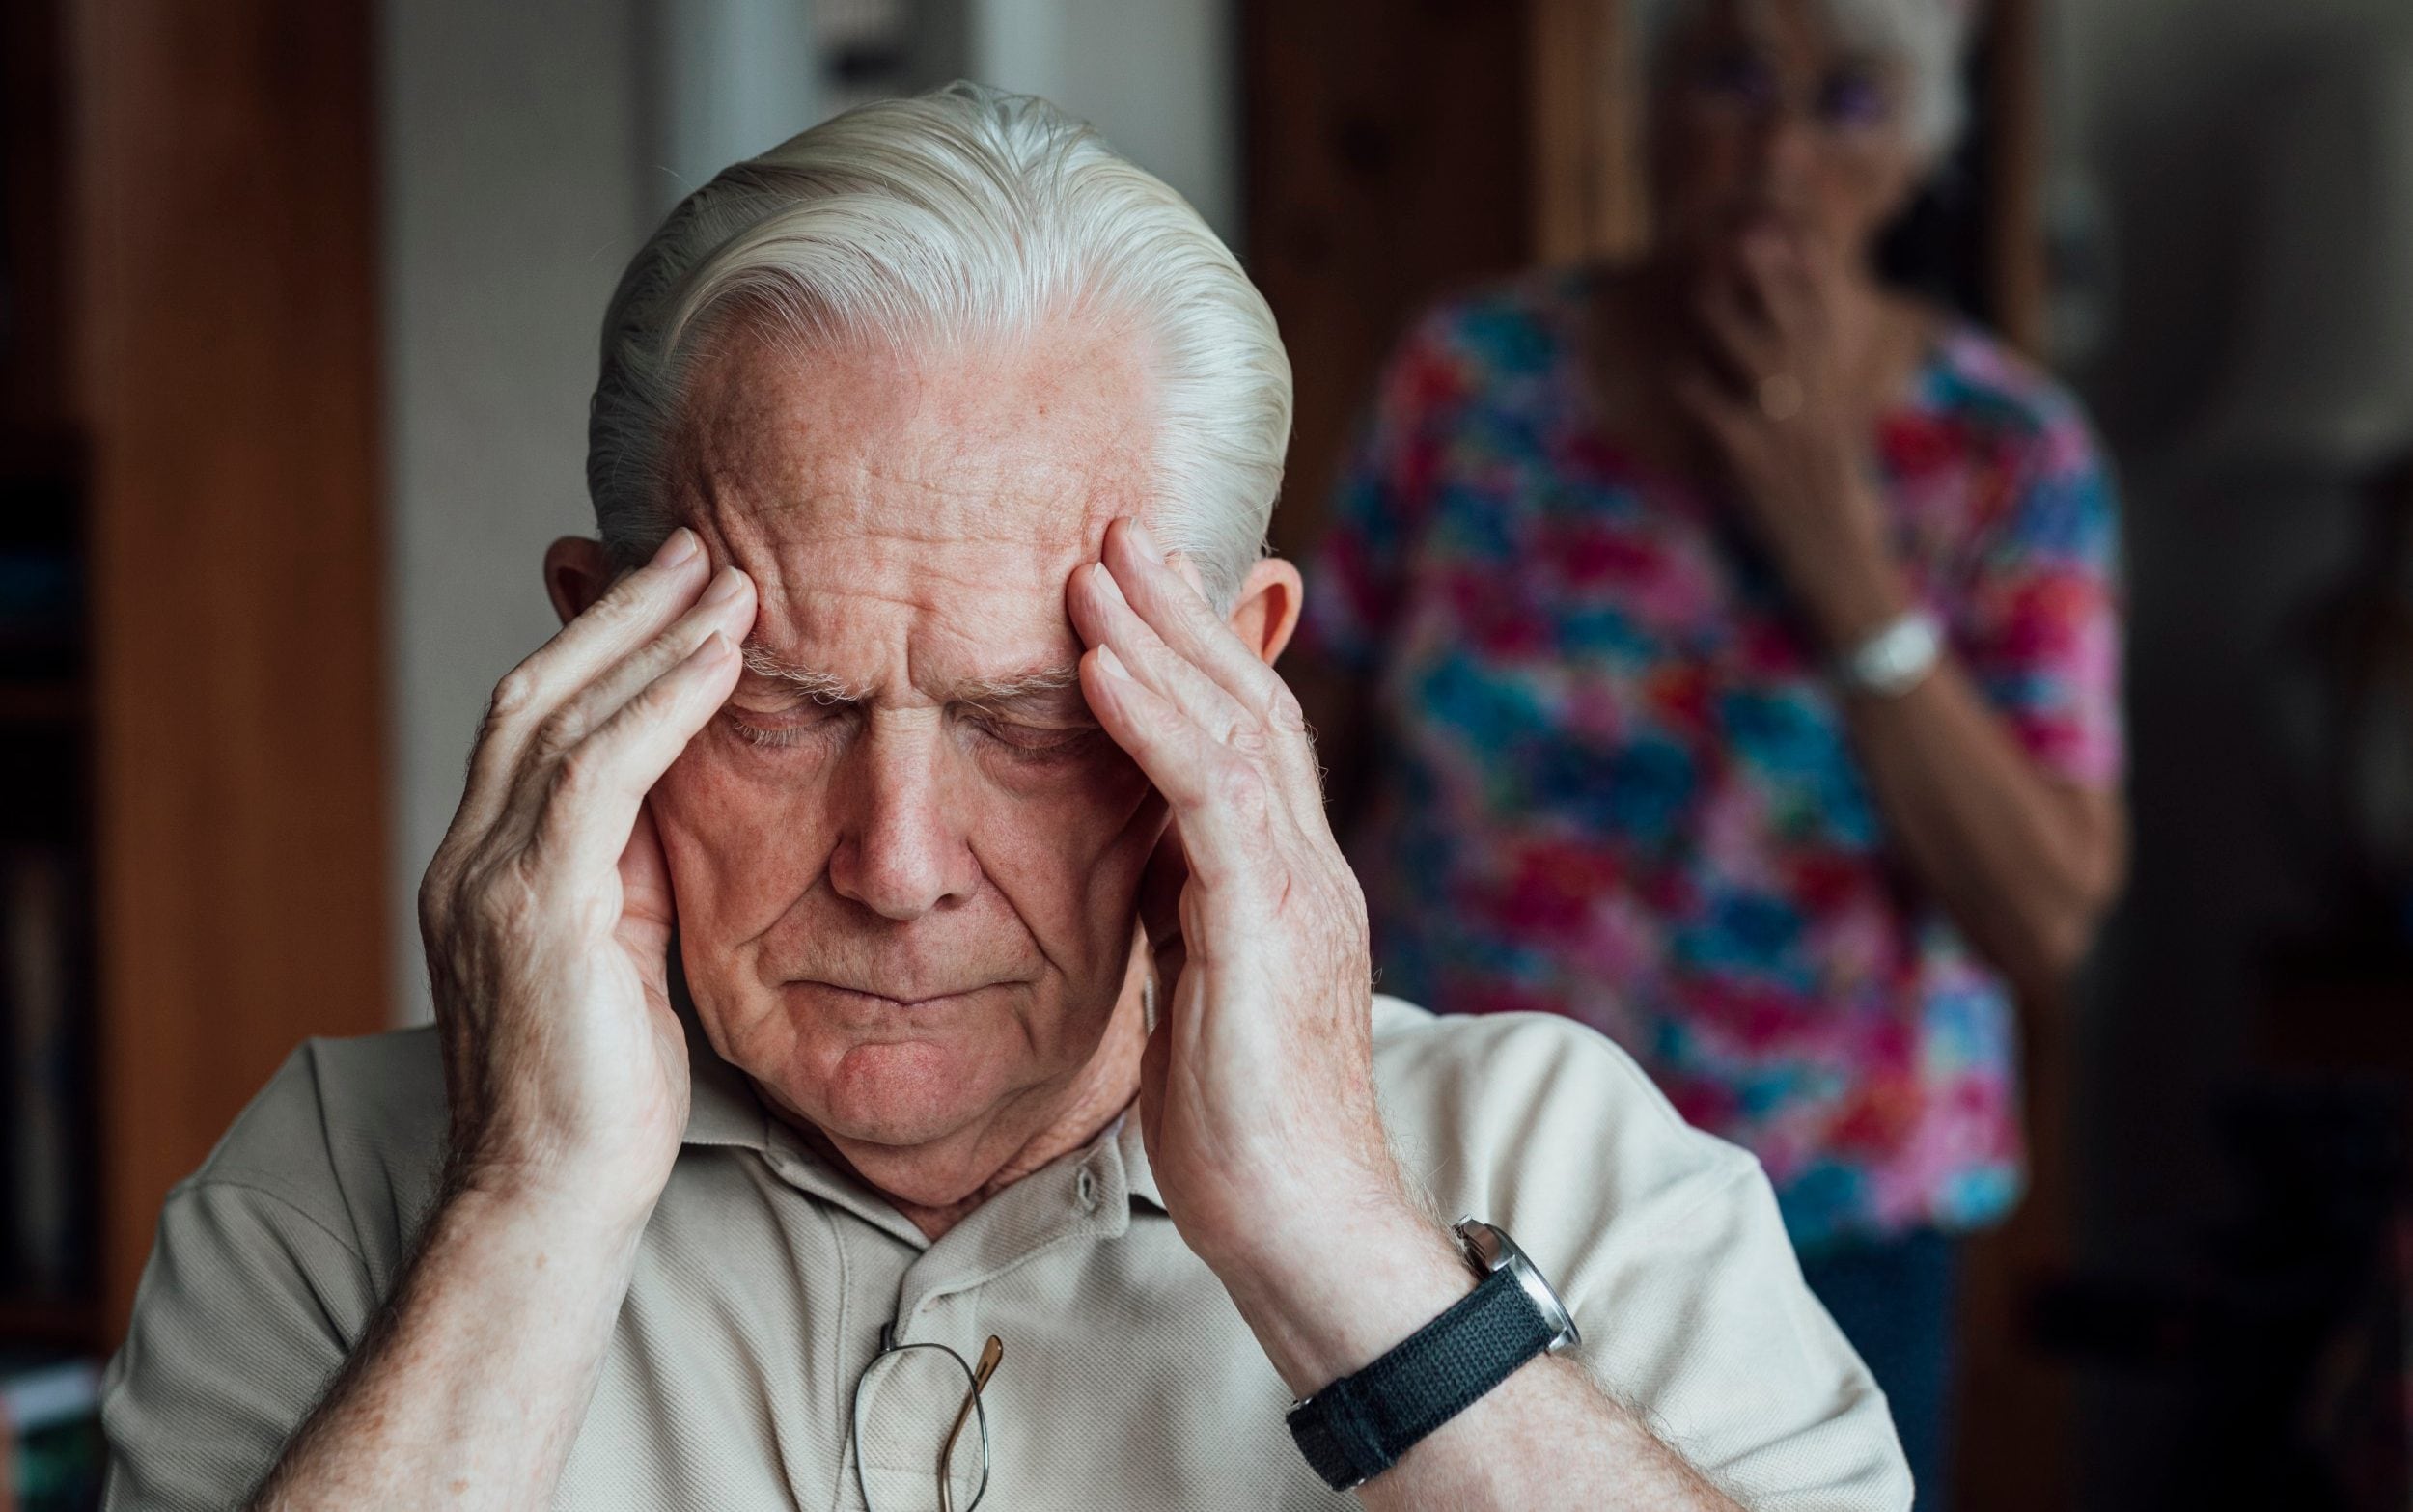 prescribing antipsychotic drugs for dementia patients ‘more dangerous than thought’